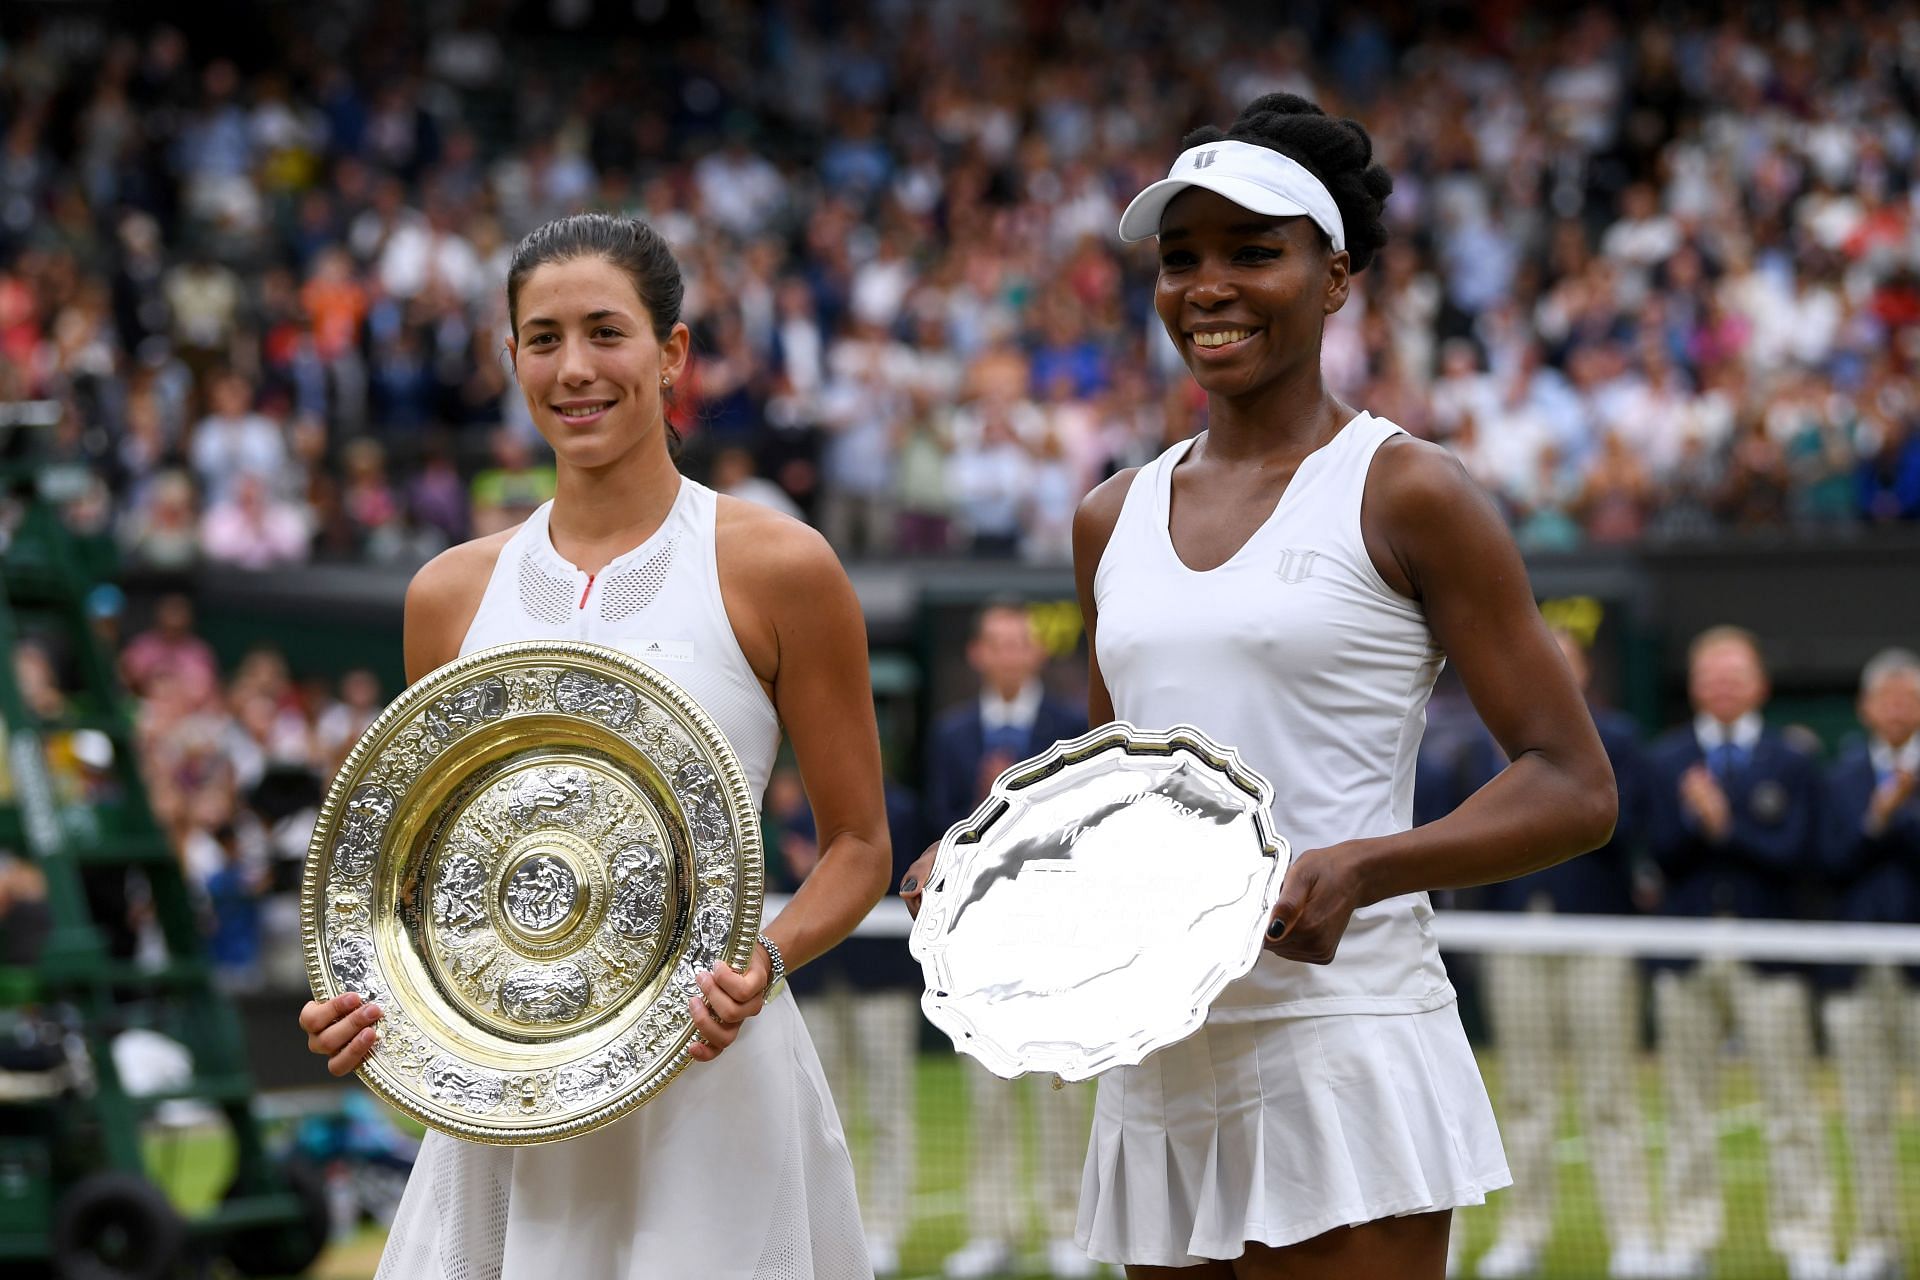 Garbine Muguruza (L) and Venus Williams (R) during the trophy presentation ceremony at the 2017 Wimbledon Championships